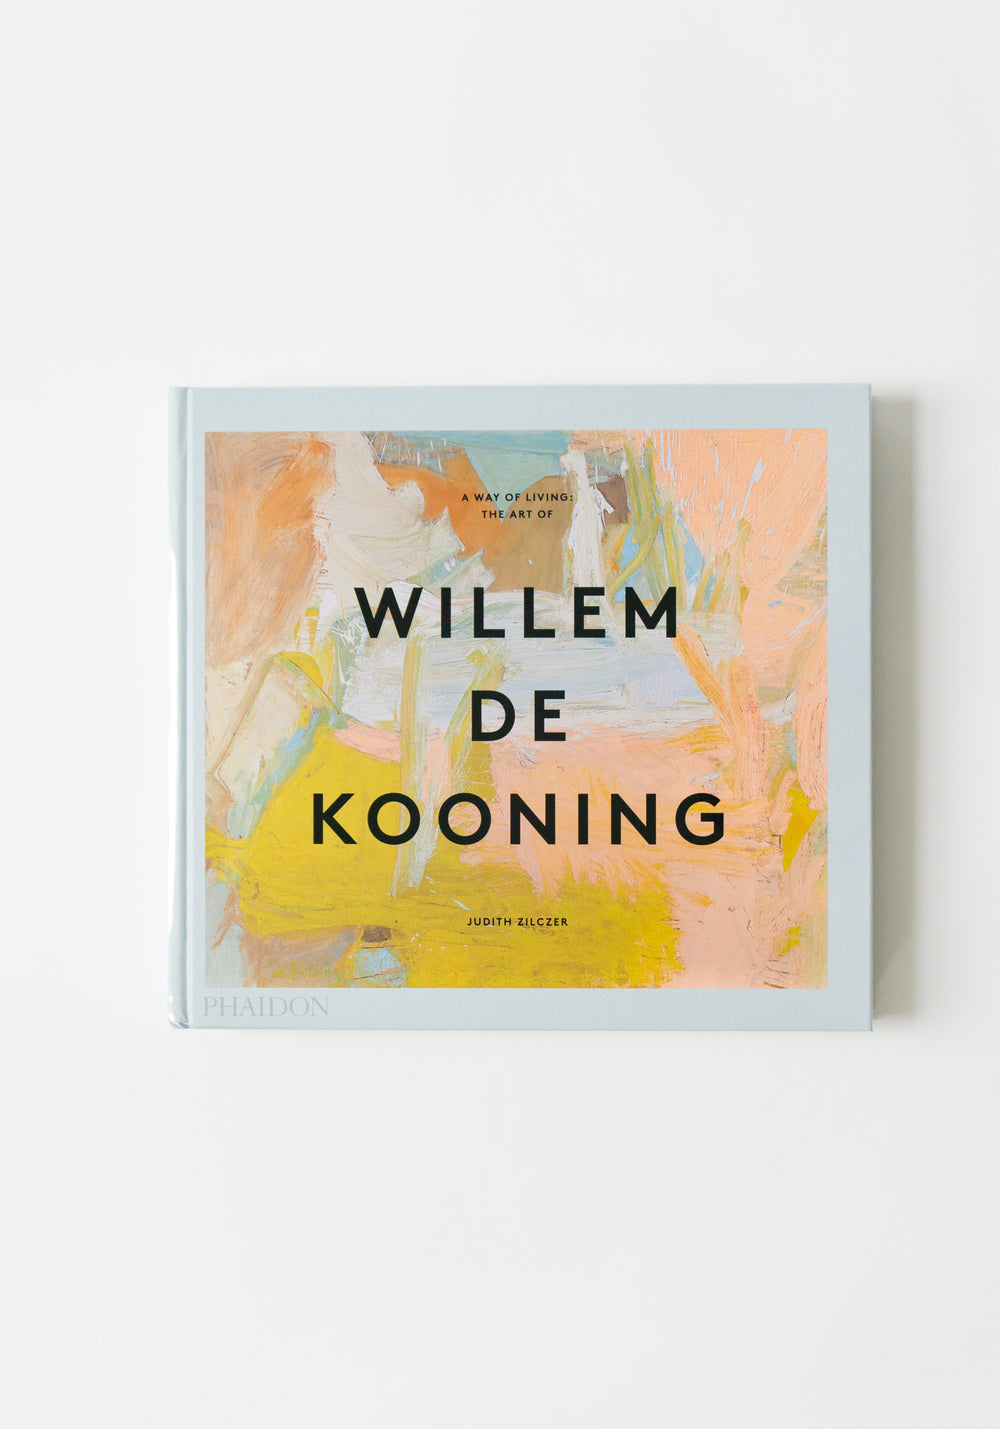 A Way of Living: The Art of Willem De Kooning